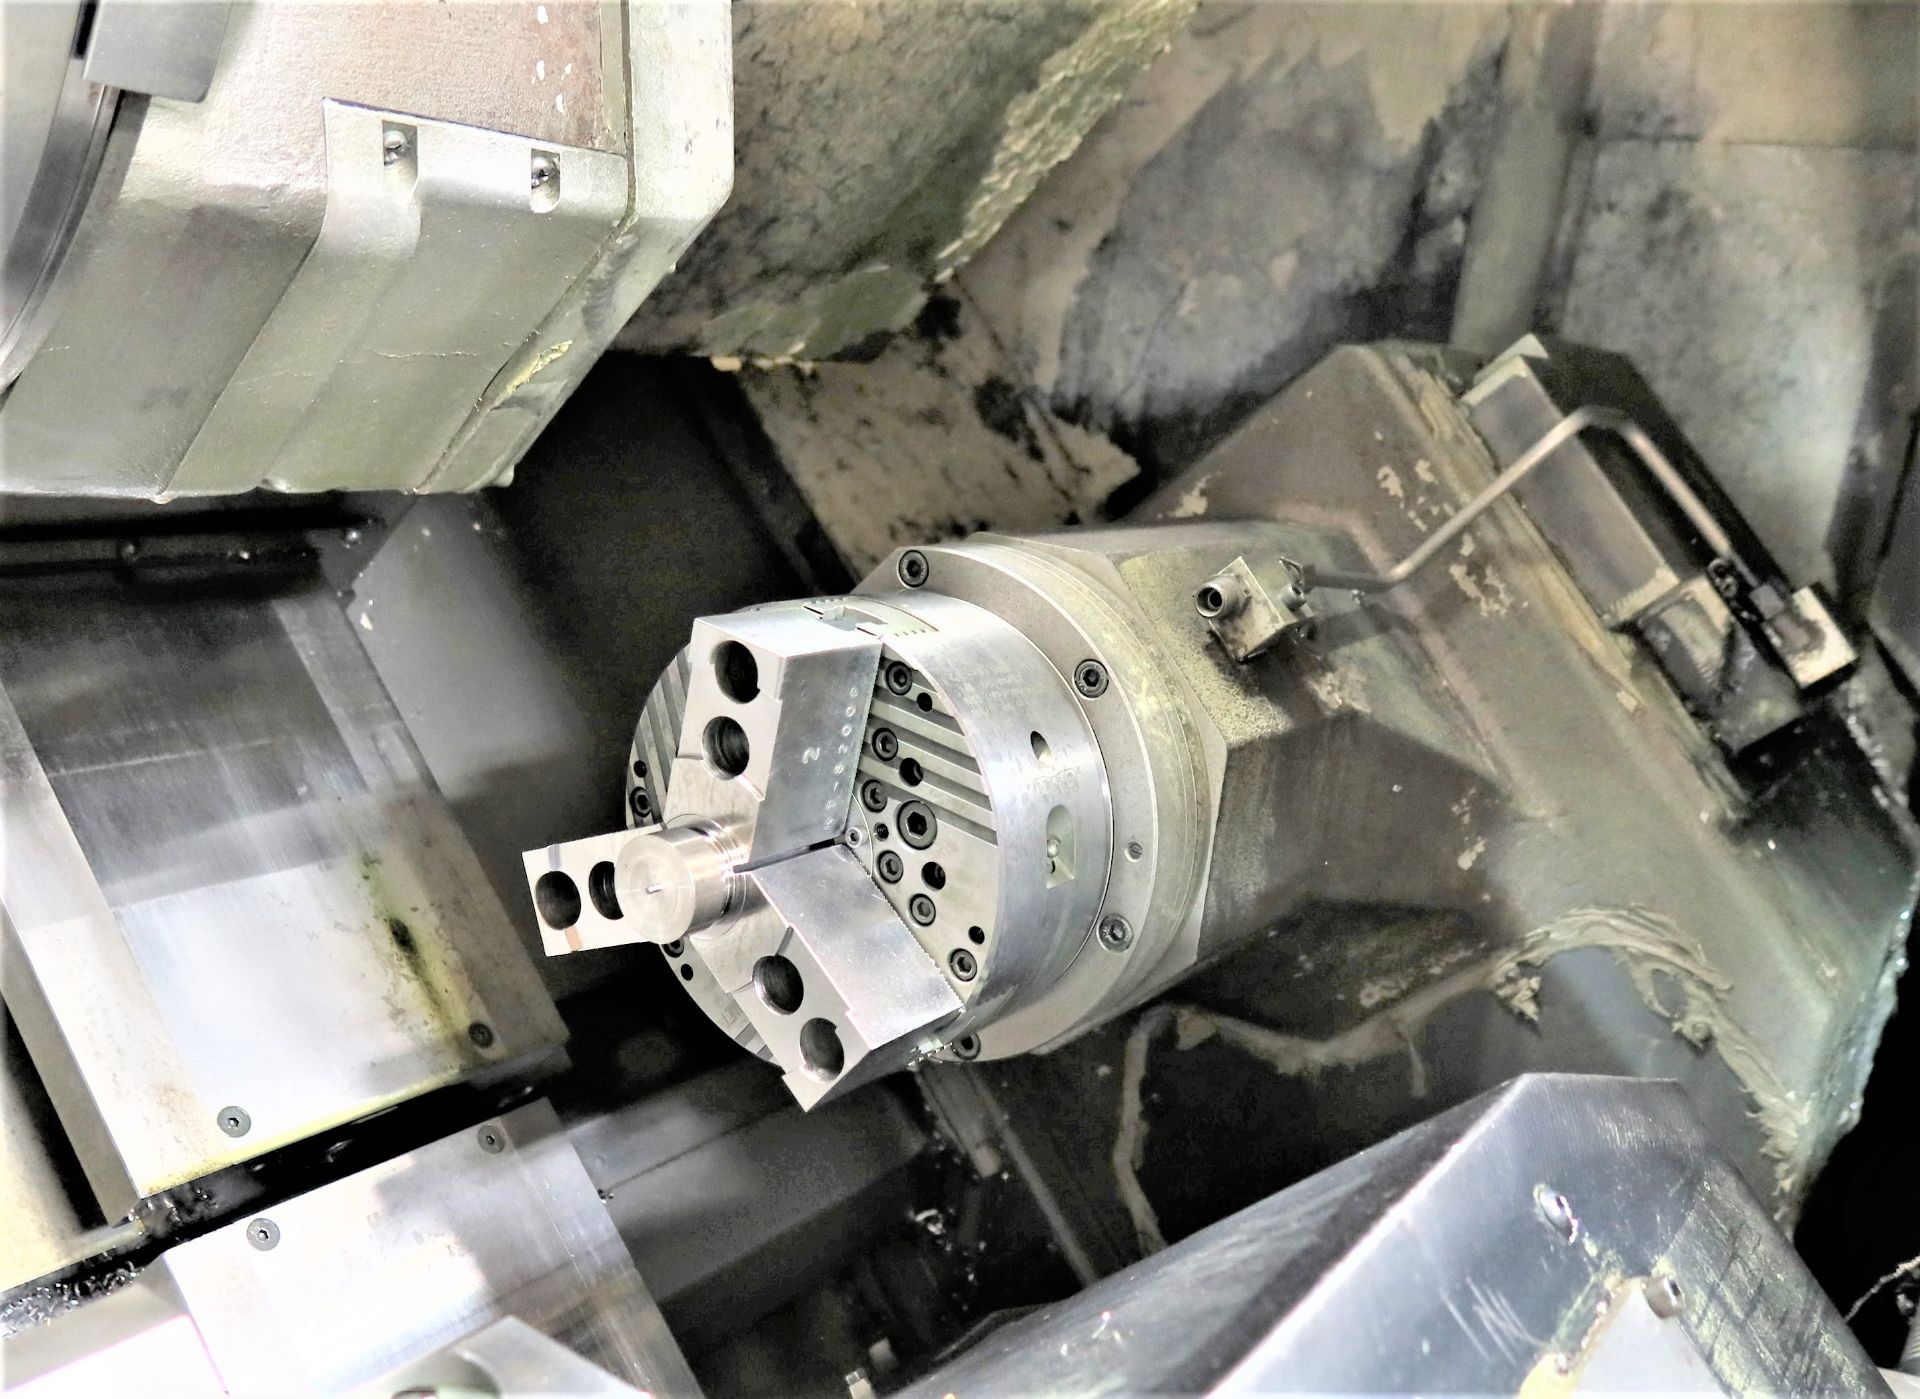 Okuma LU-15II-MW 4-Axis CNC Turning Center w/Live Tools & Sub Spindle, S/N 0474 - Image 7 of 14